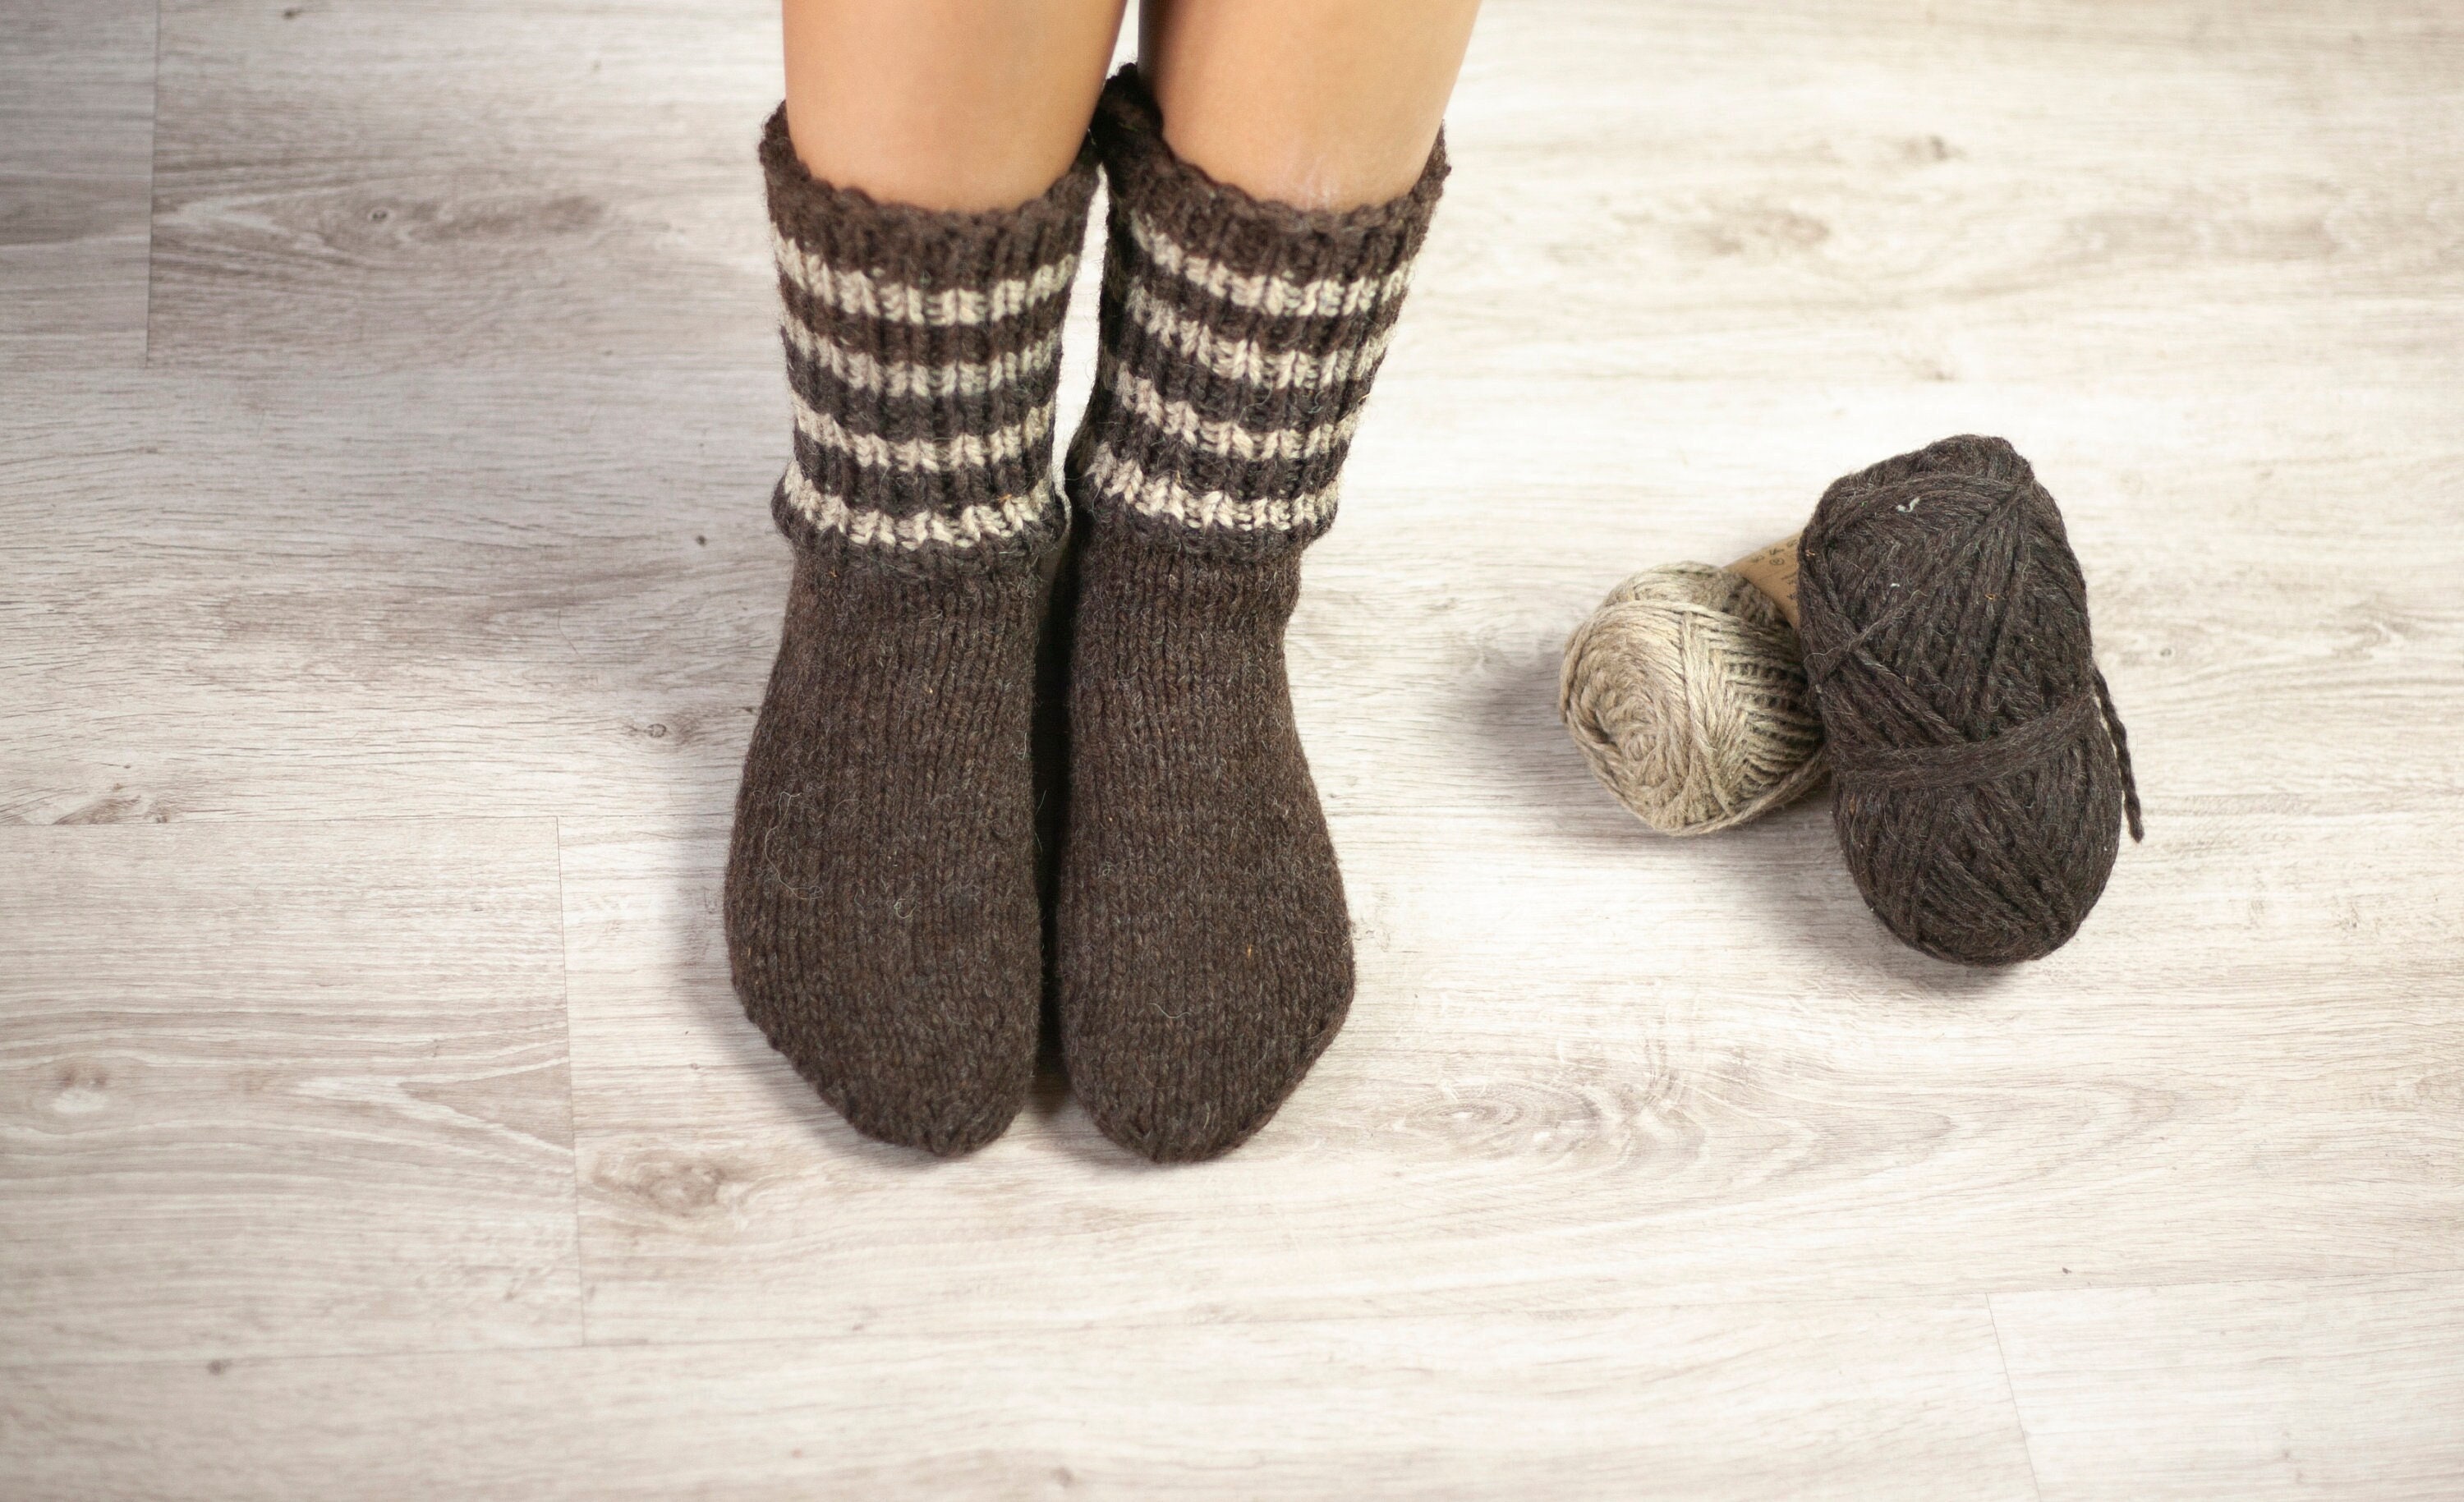 Warm Socks Winter Socks Woolen Socks Knitted Handmade Gray U